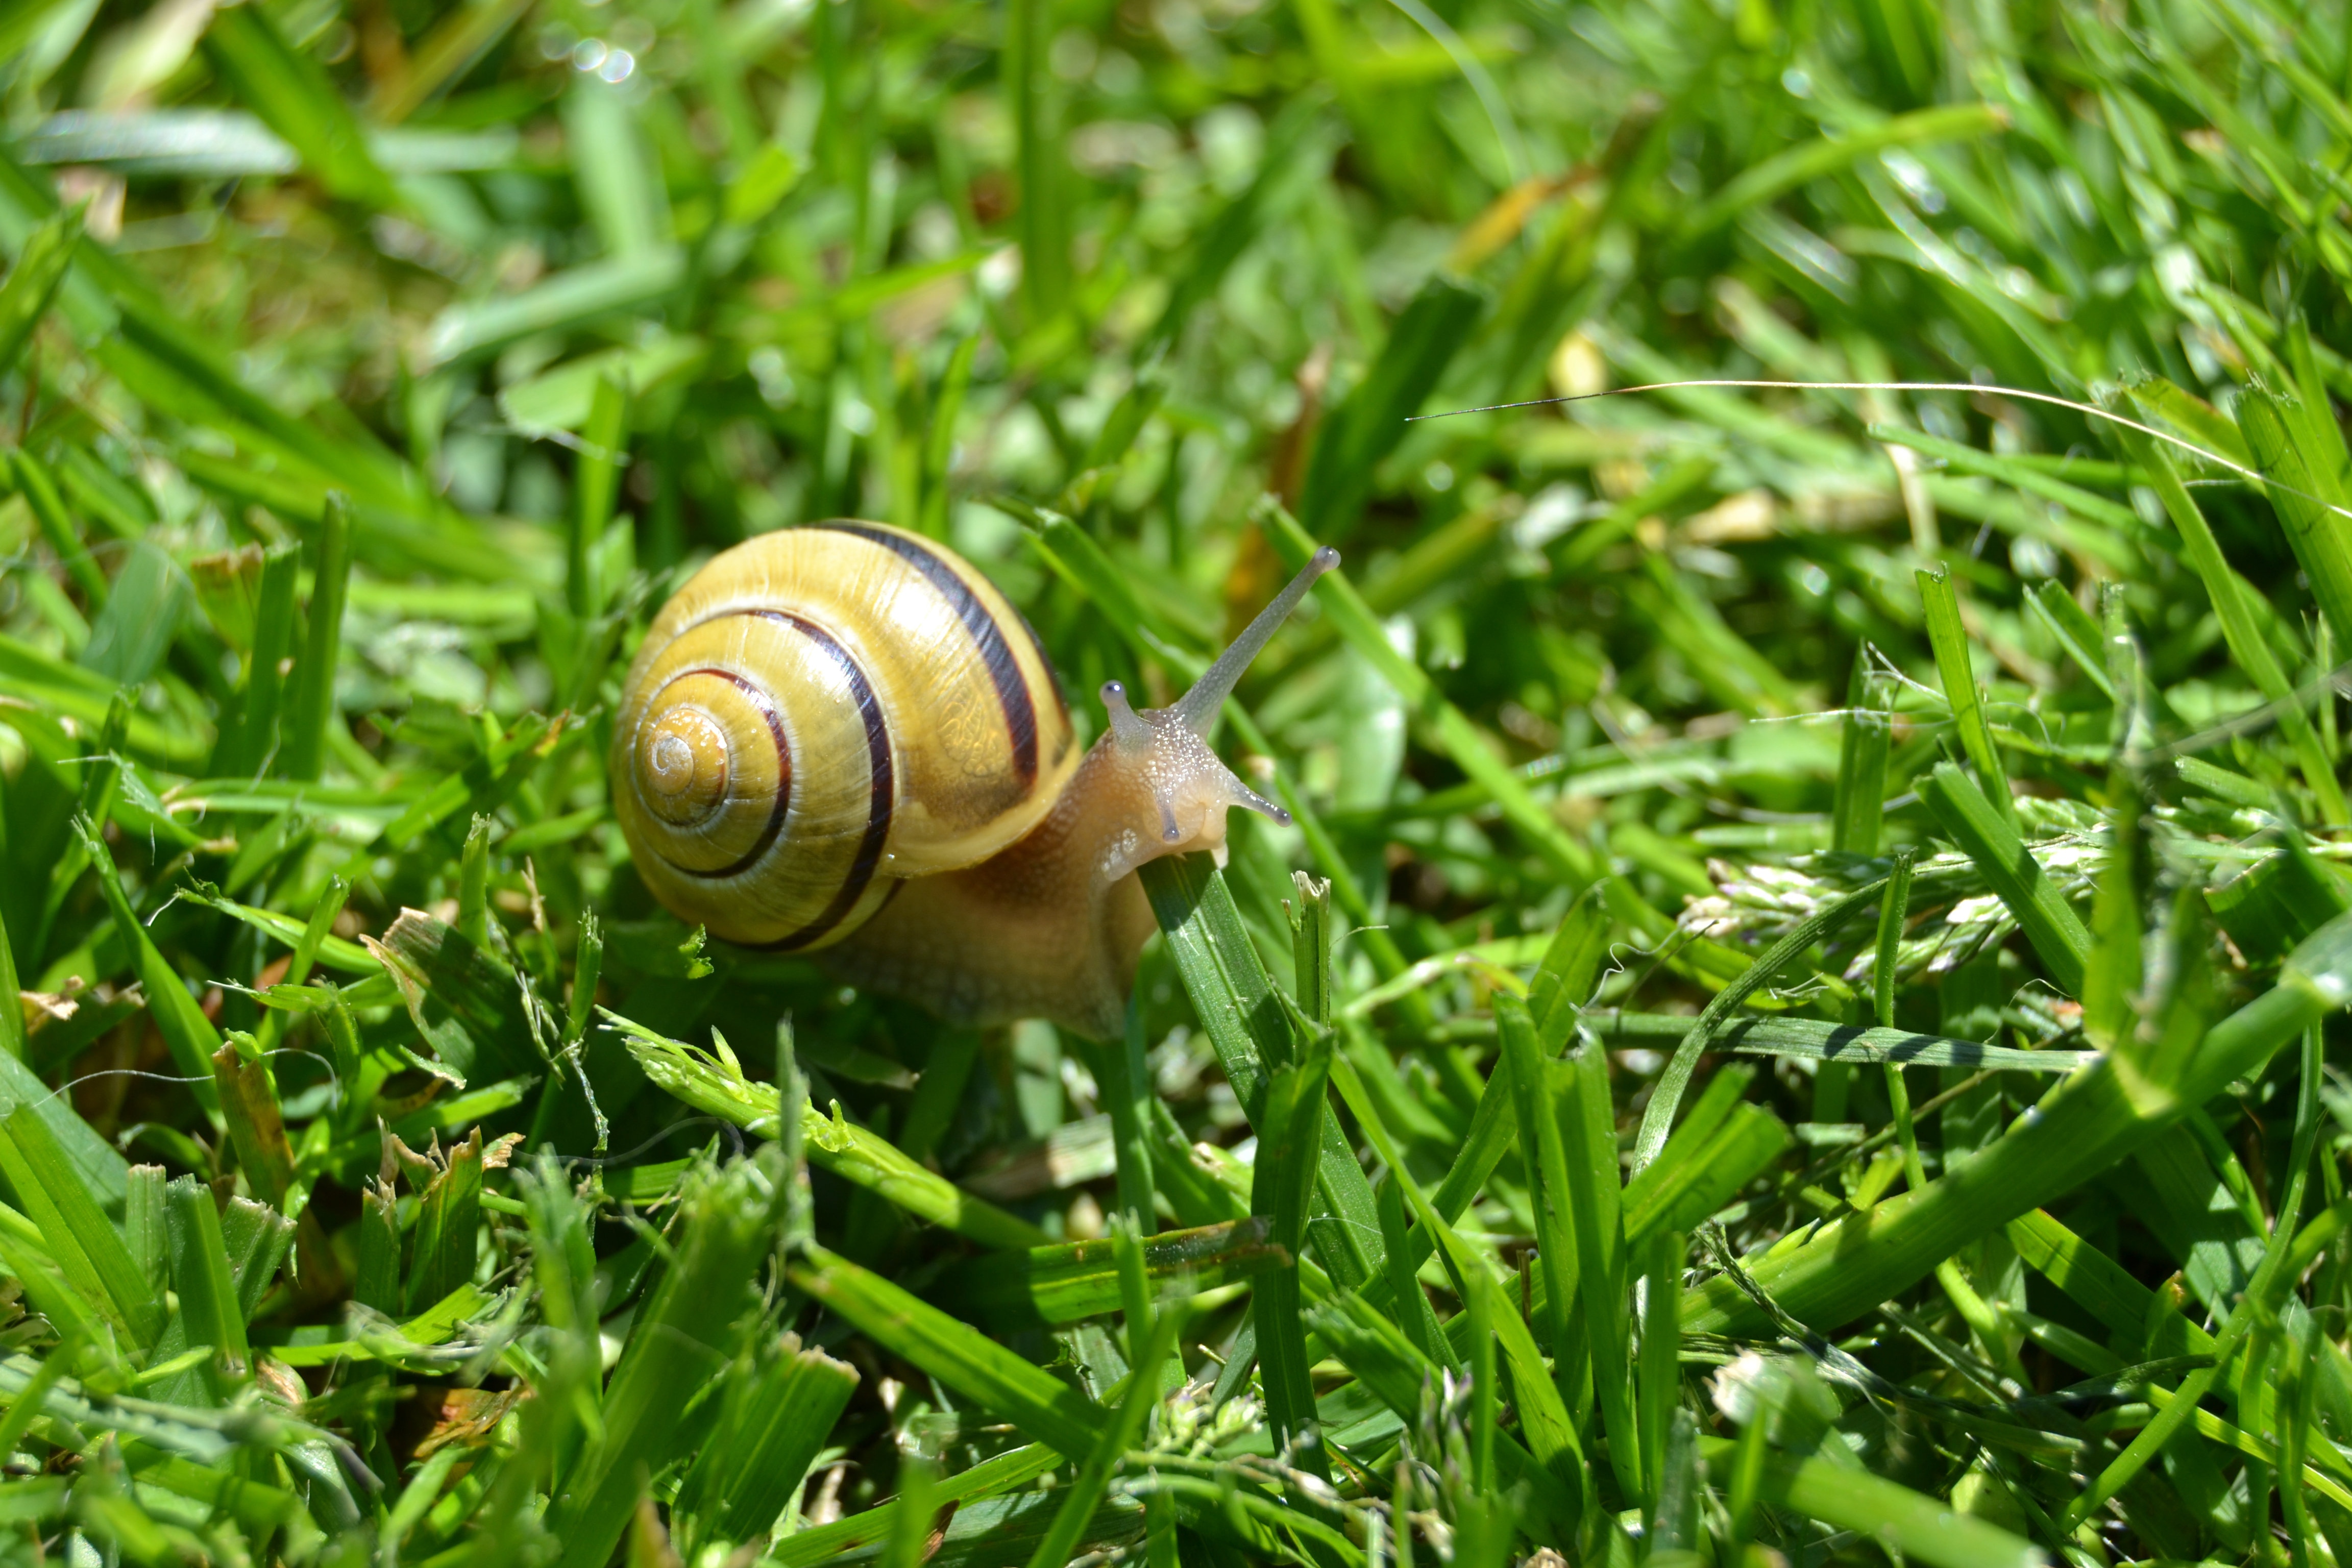 General 4608x3072 snail nature animals grass closeup